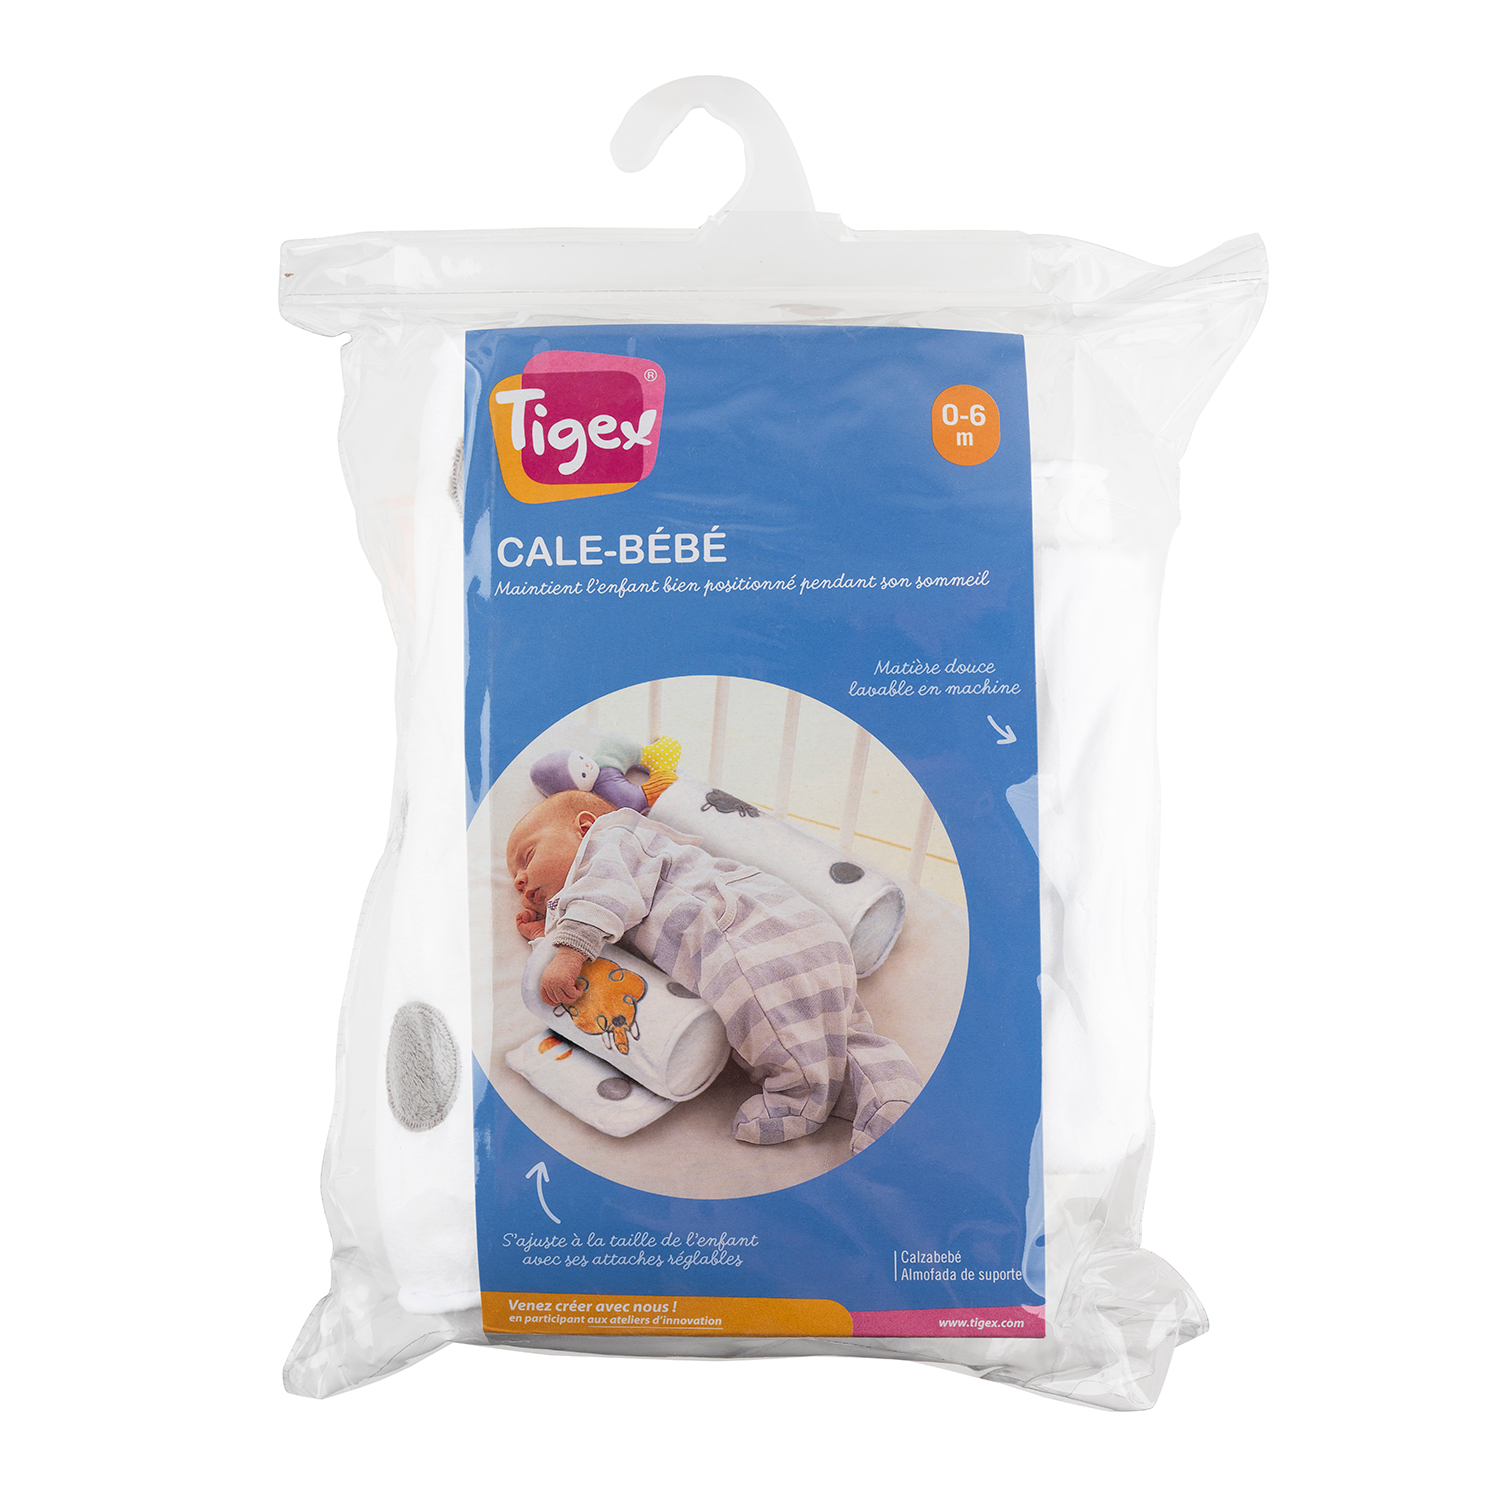 Cale-bébé Tigex - Blanc - Kiabi - 21.59€